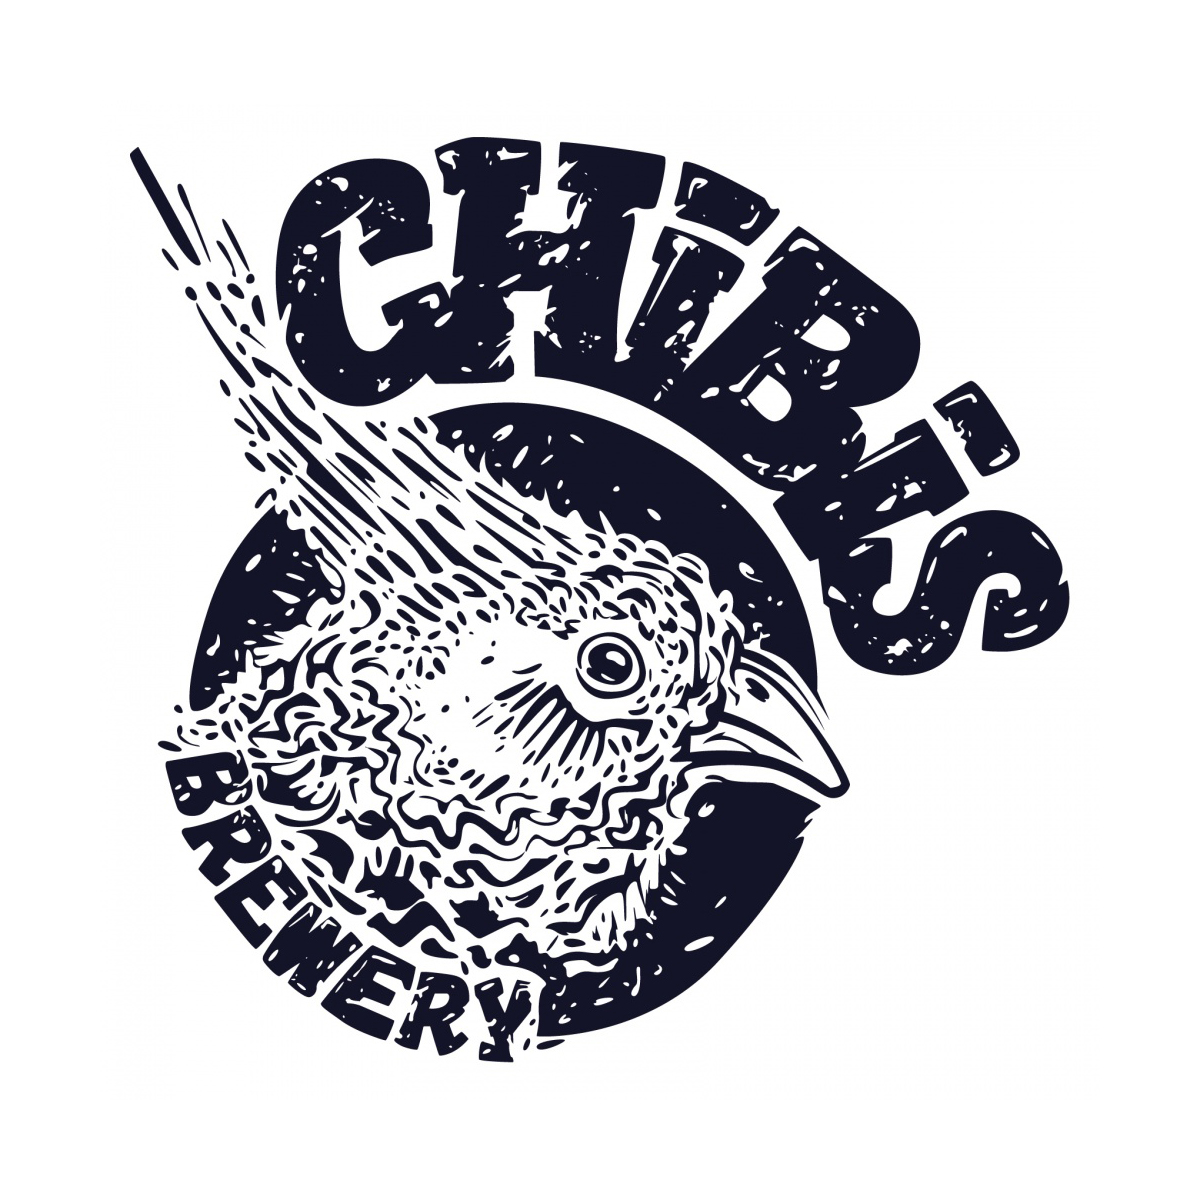 Chibis Brewery